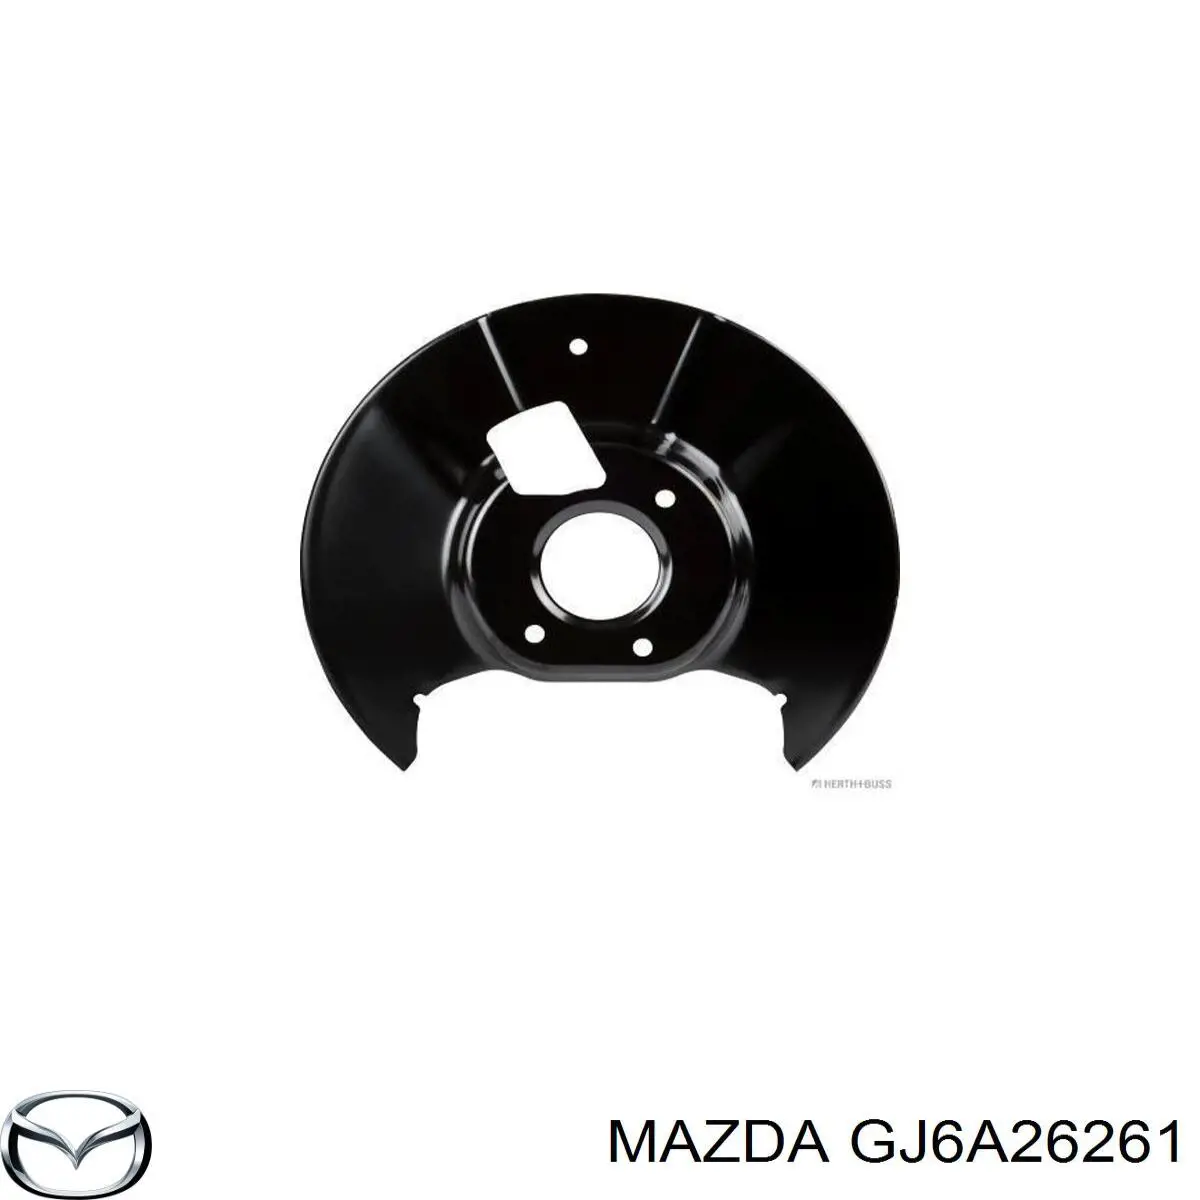 GJ6A26261 Mazda chapa protectora contra salpicaduras, disco de freno trasero derecho